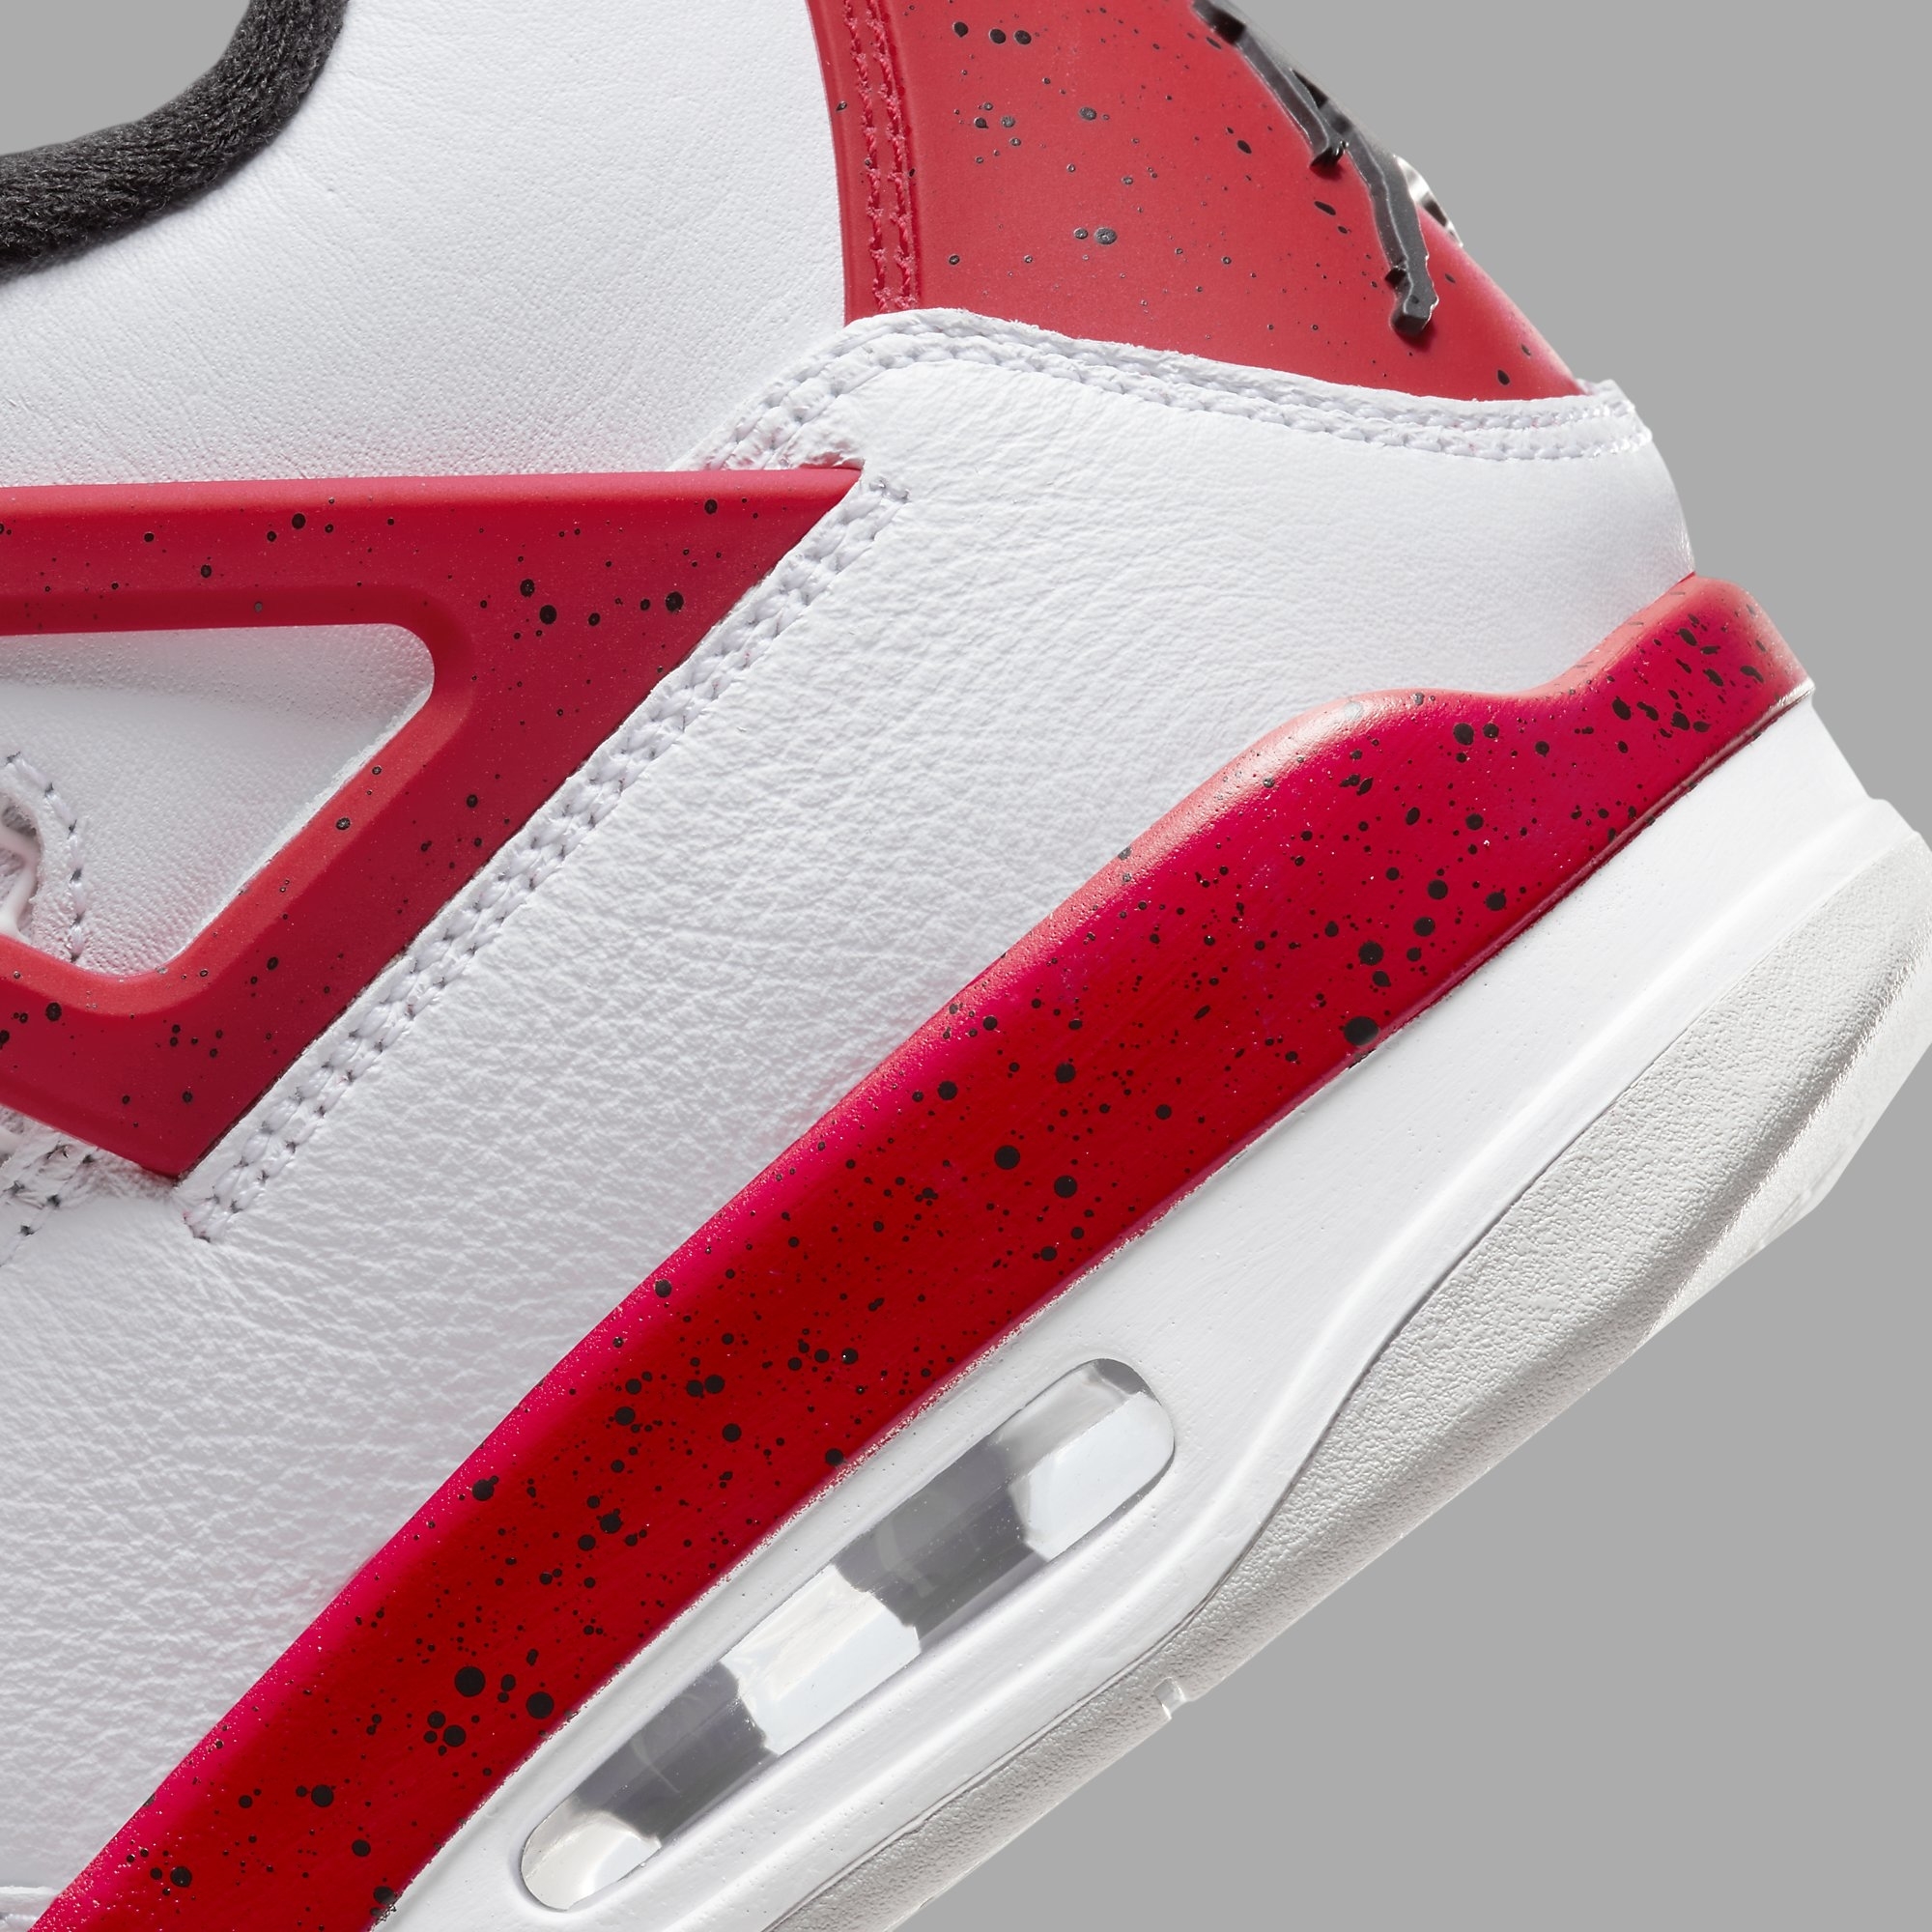 Air Jordan 4 IV Red Cement Release Date DH6927-161 Heel Detail